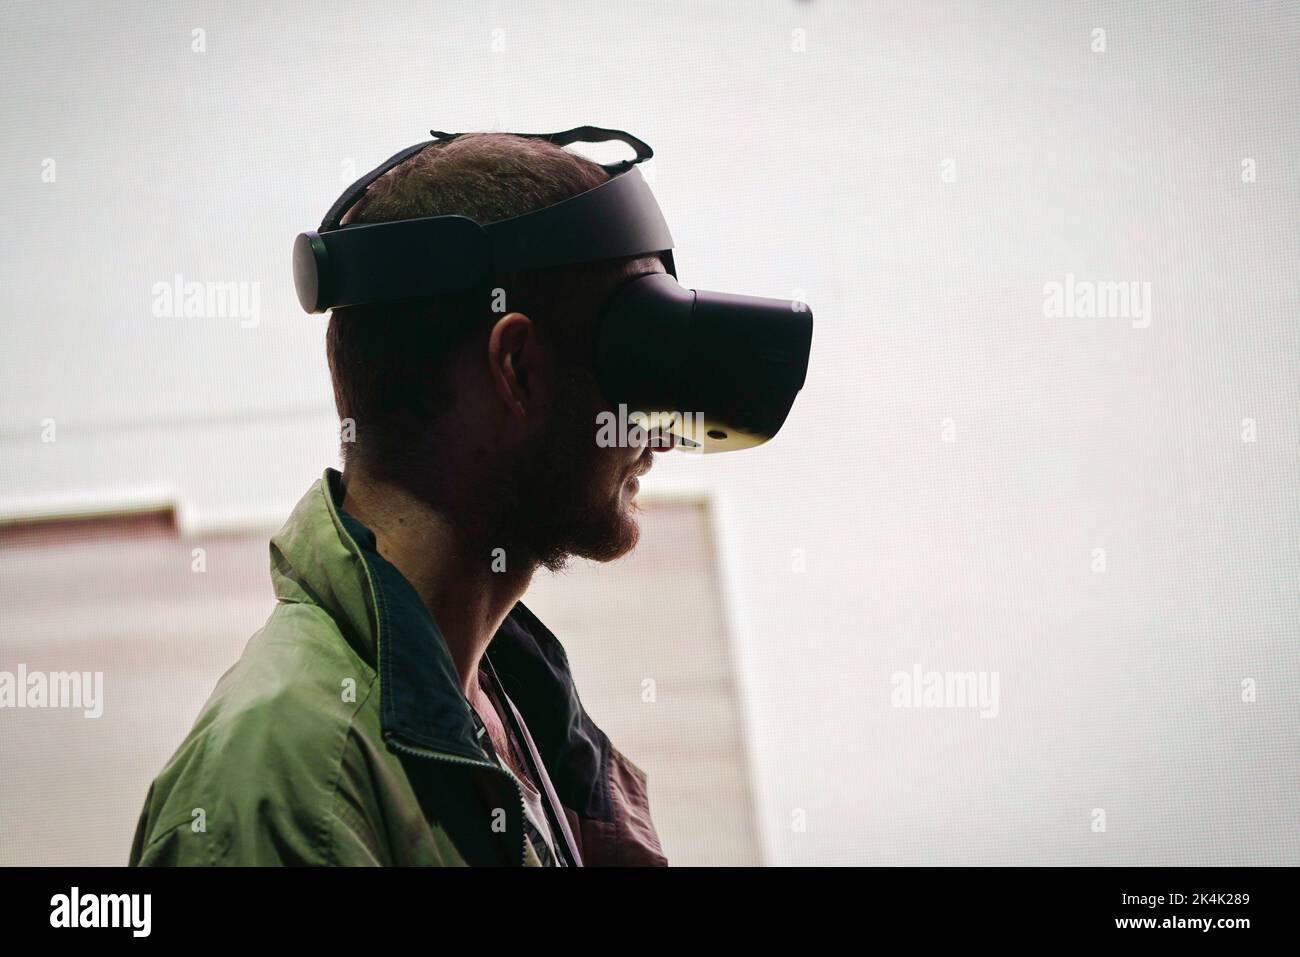 Virtual reality exhibit. Young man wears virtual reality goggles experiences a metaverse encounter. Turin, Italy - September 2022 Stock Photo